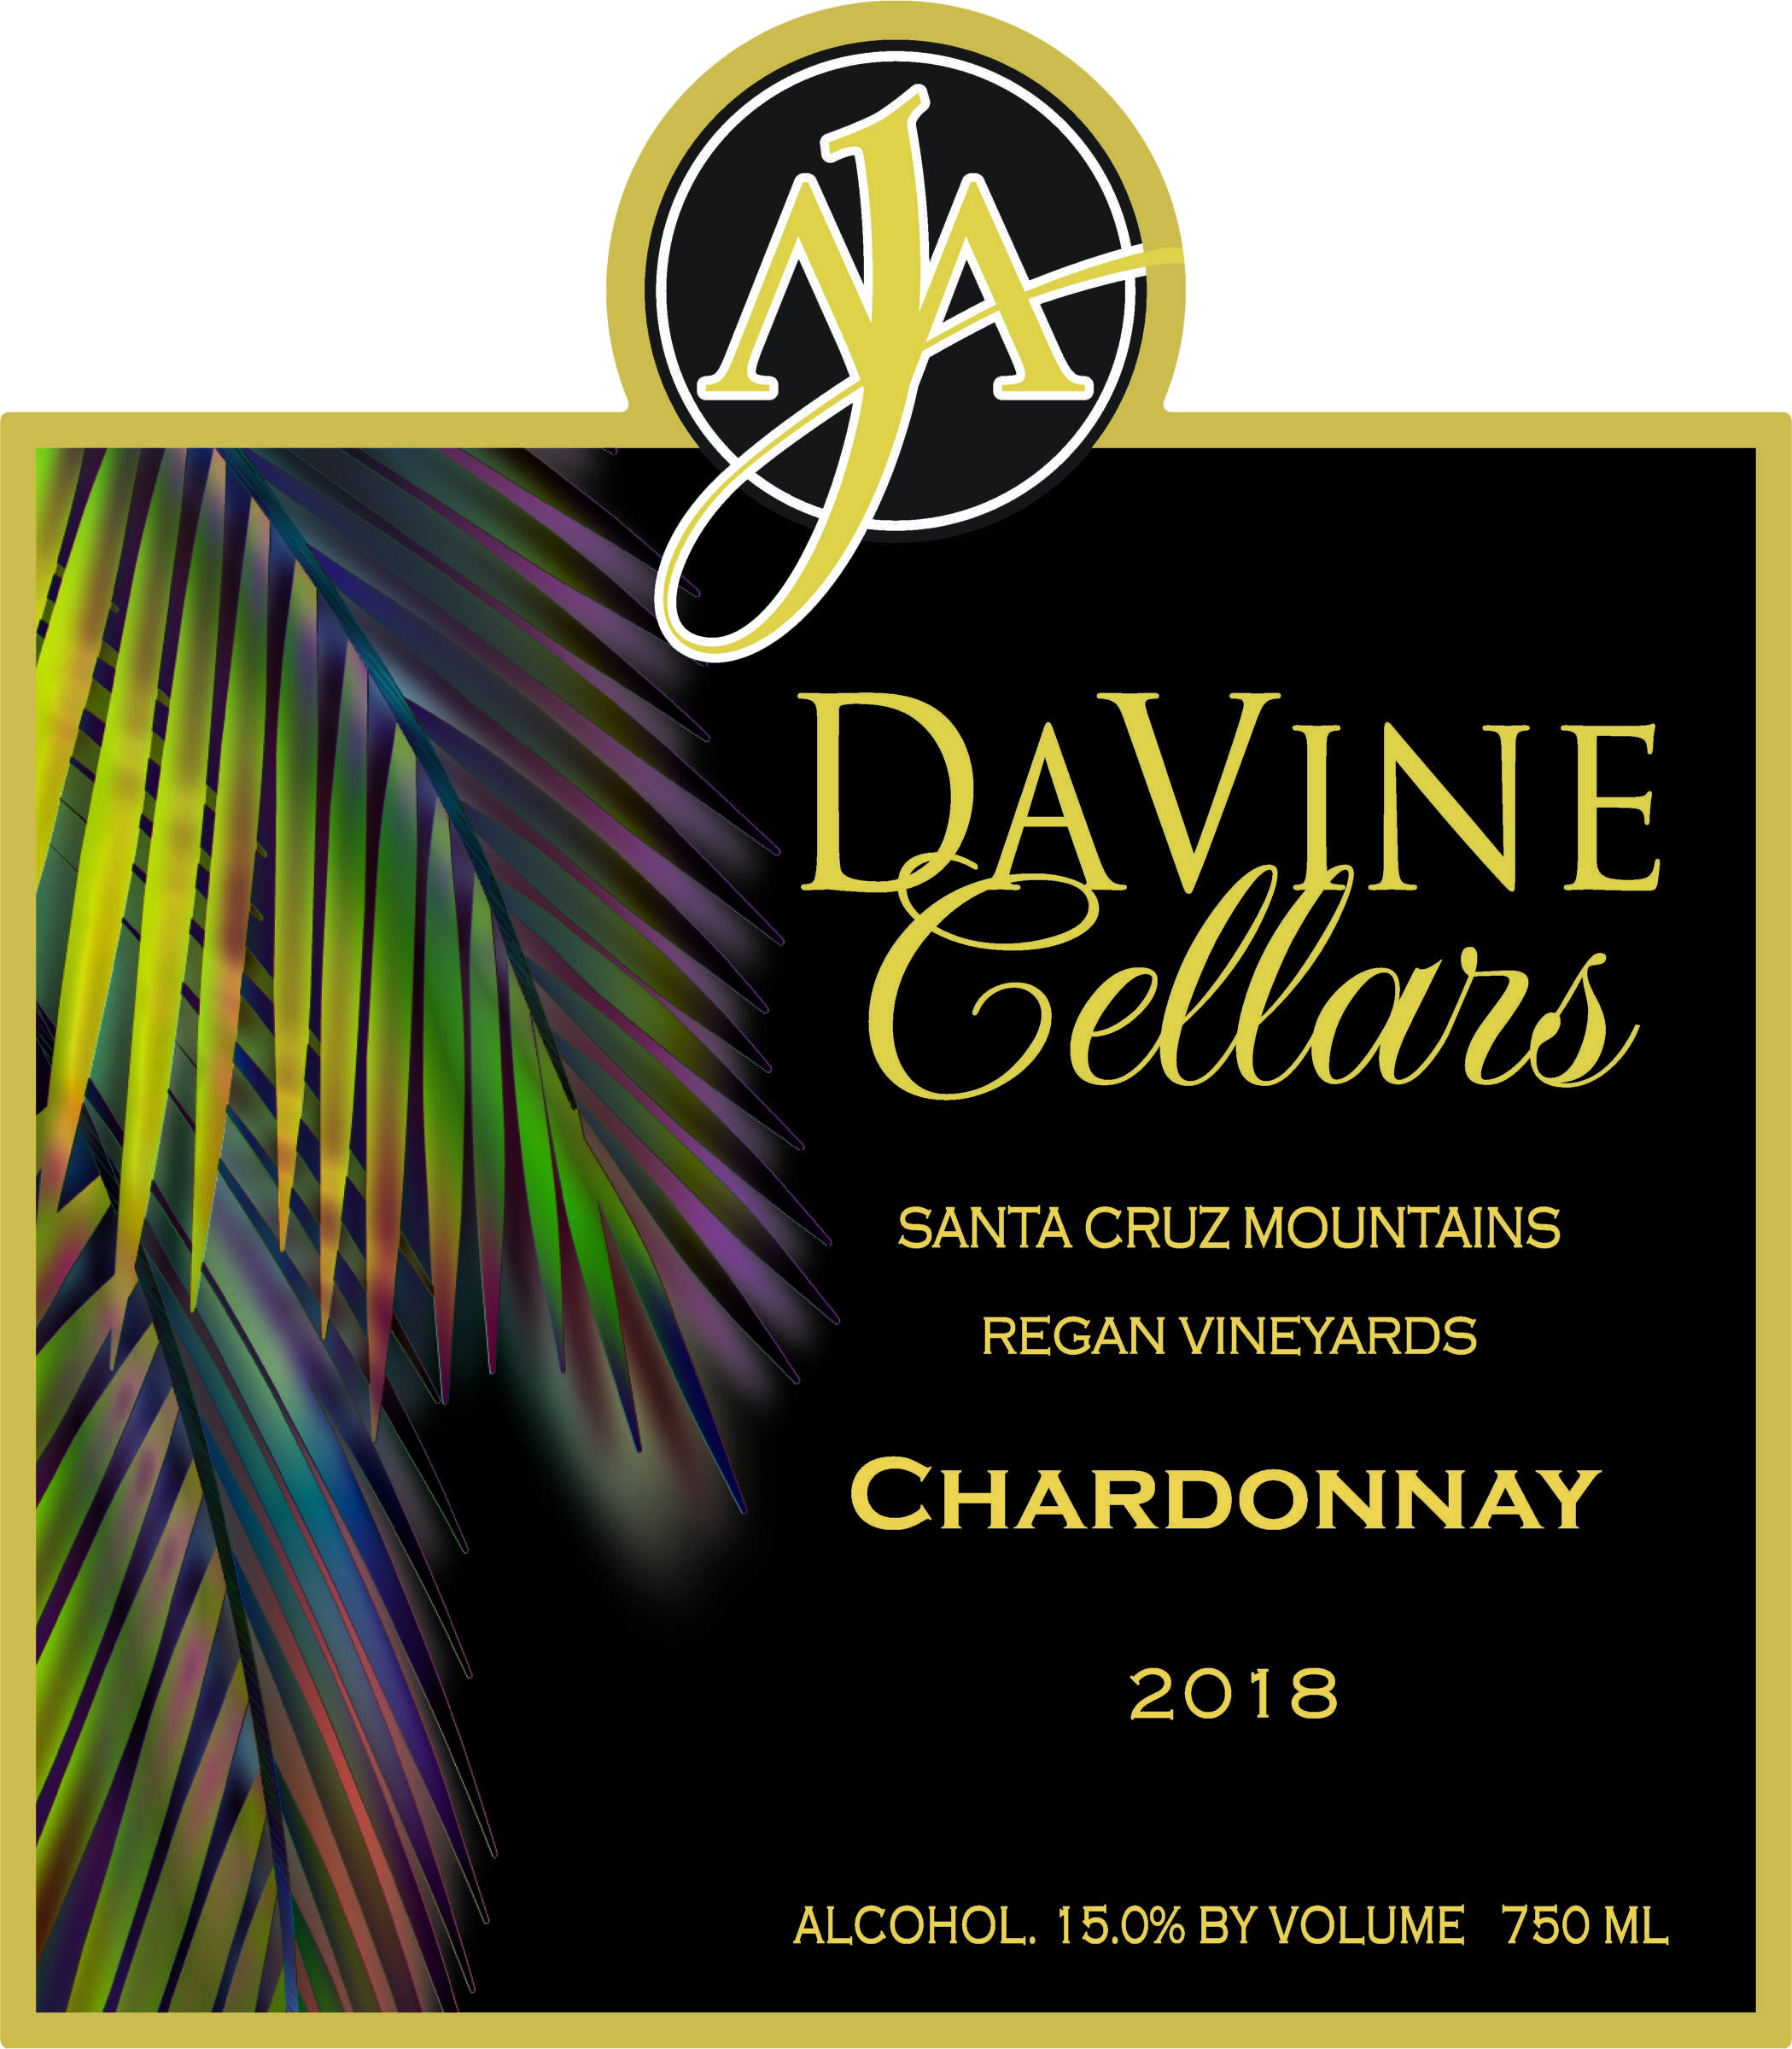 Product Image for 2018 Santa Cruz Mountains Chardonnay "Playful"